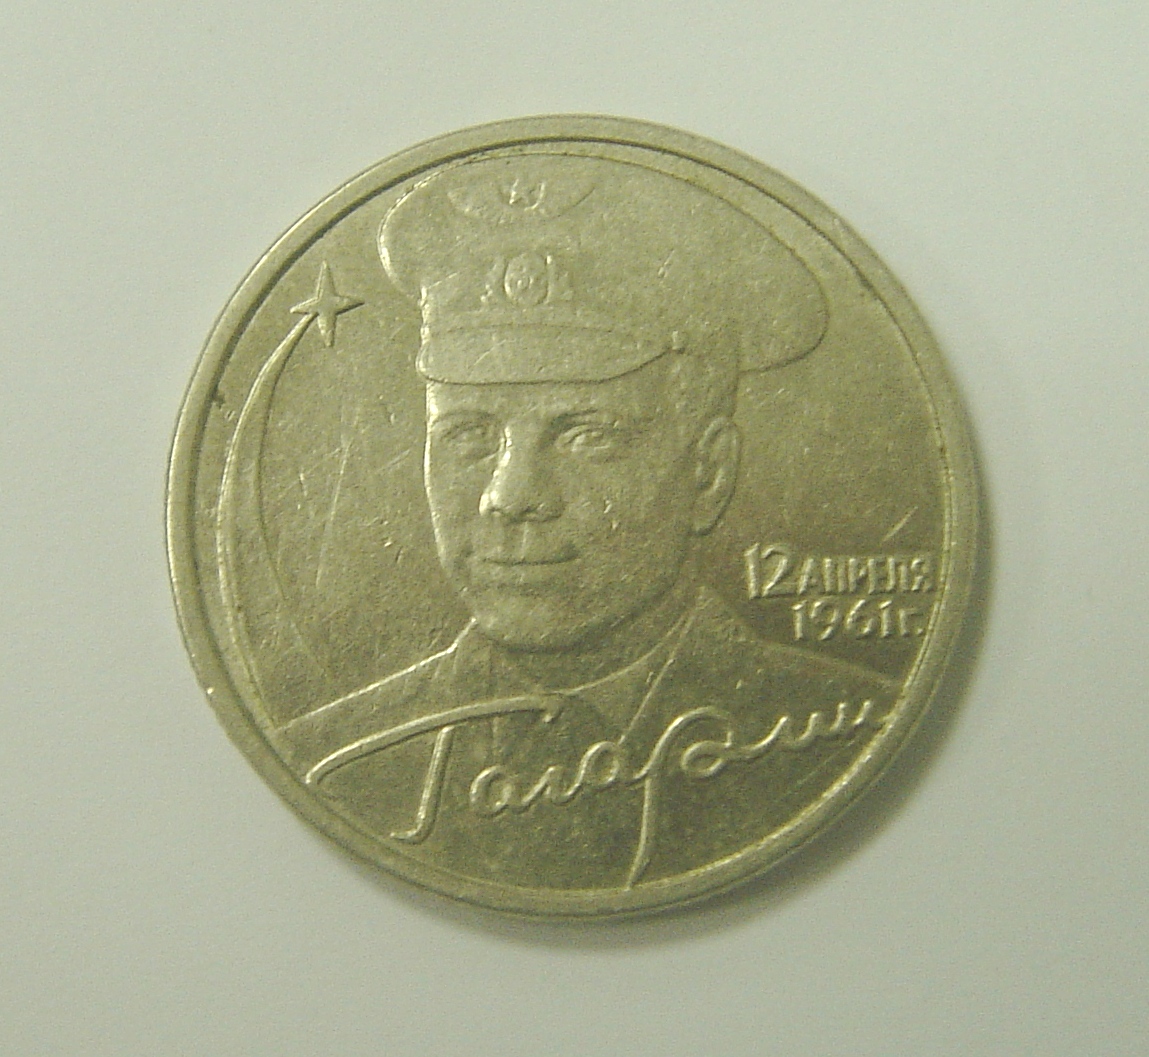 2 рубля 2001 года с гагариным. Монета 2 рубля Гагарина. Монета Гагарин. Монеты с изображением Гагарина. Монета 2 рубля Гагарин.